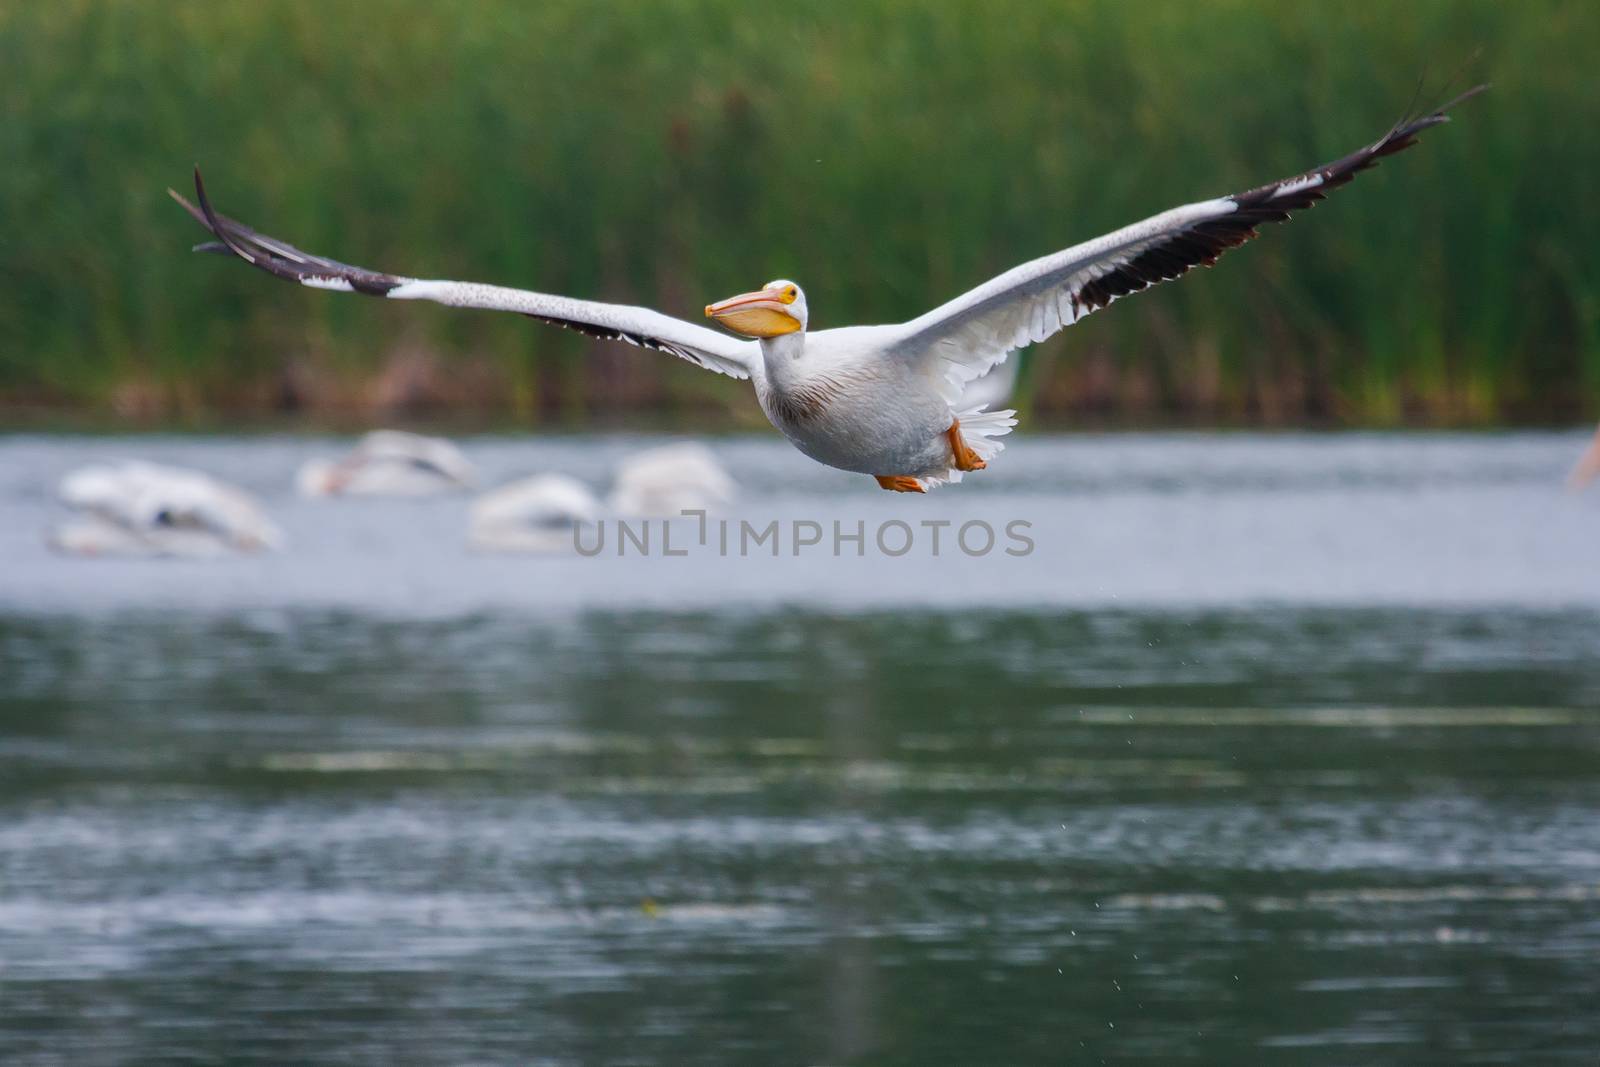 White Pelican (Pelecanus erythrorhynchos) in flight by Coffee999